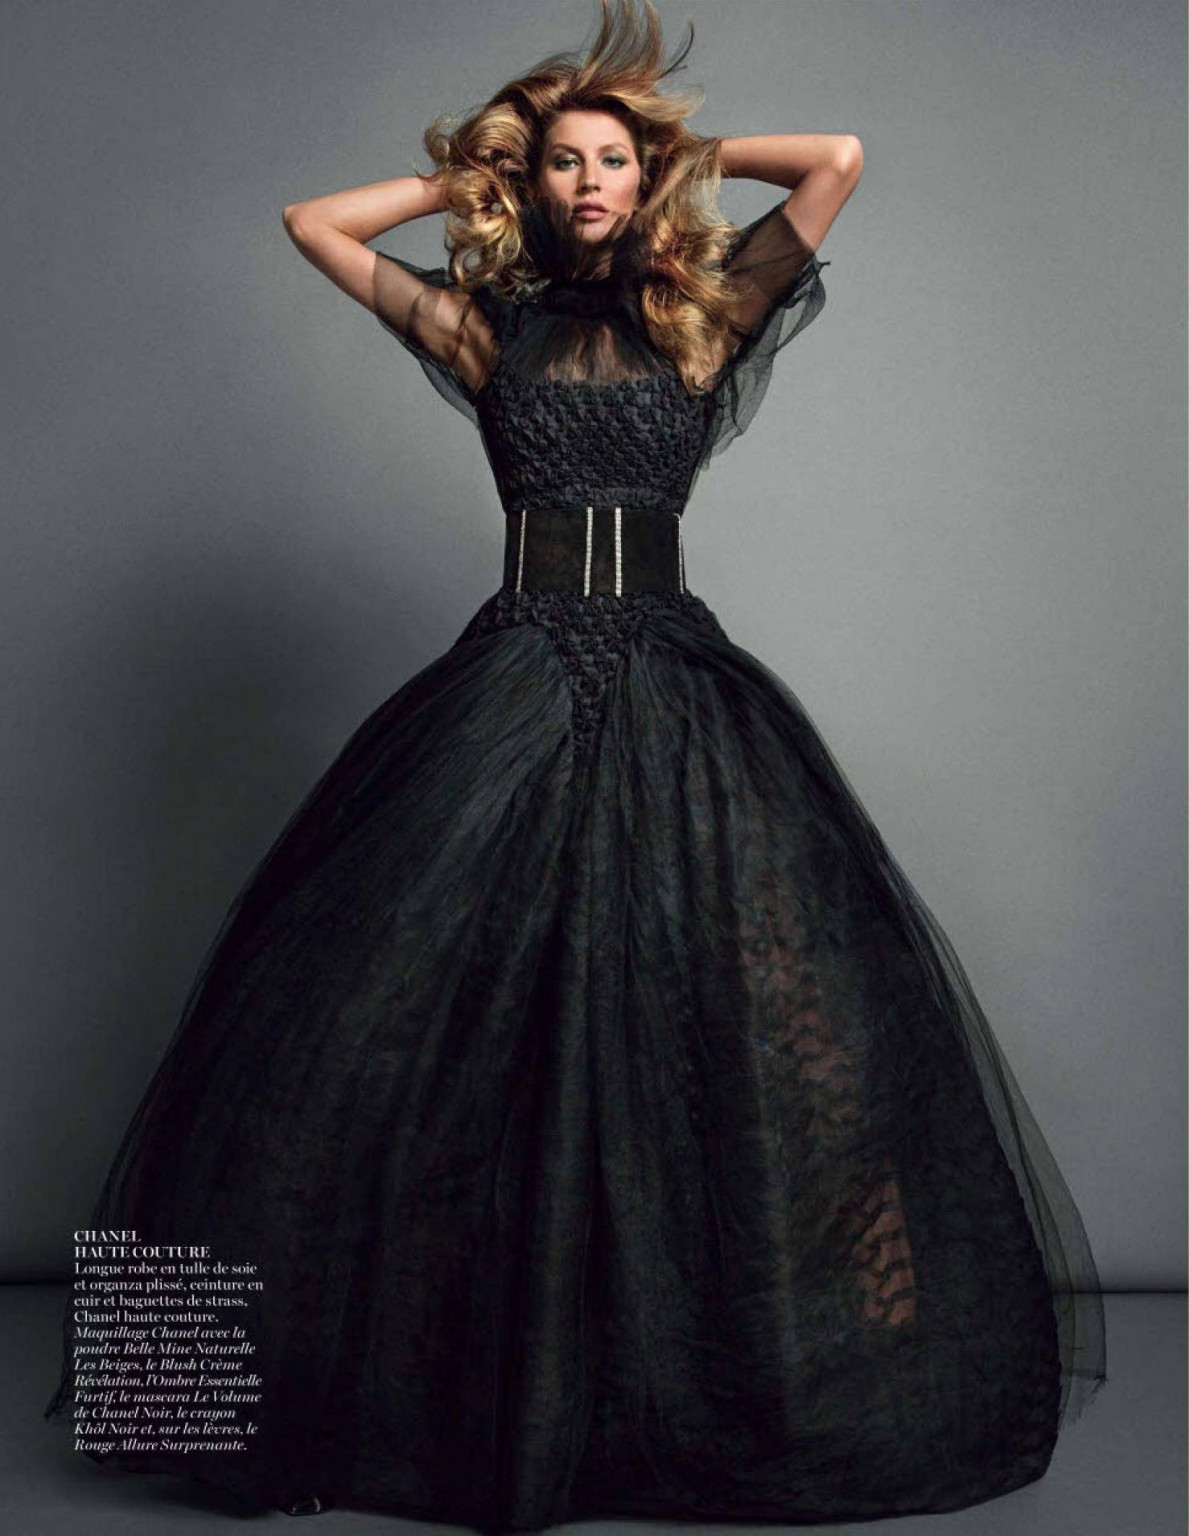 Gisele Bundchen showing off her bare ass in November issue of Vogue Magazine Par #75215129